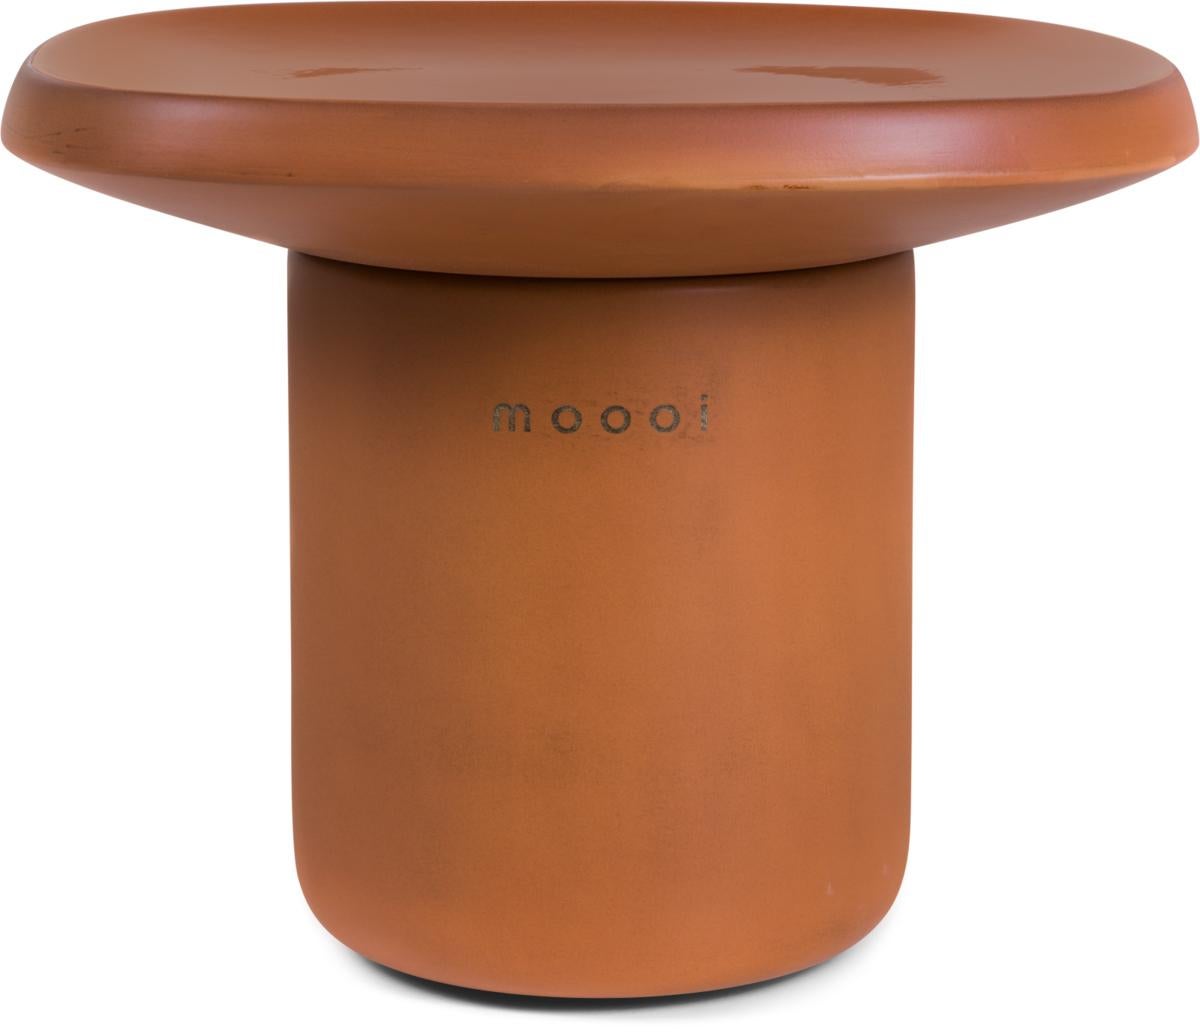 Moooi Obon Square Low Ceramic Table in Grey Finish by Simone Bonanni For Sale 3